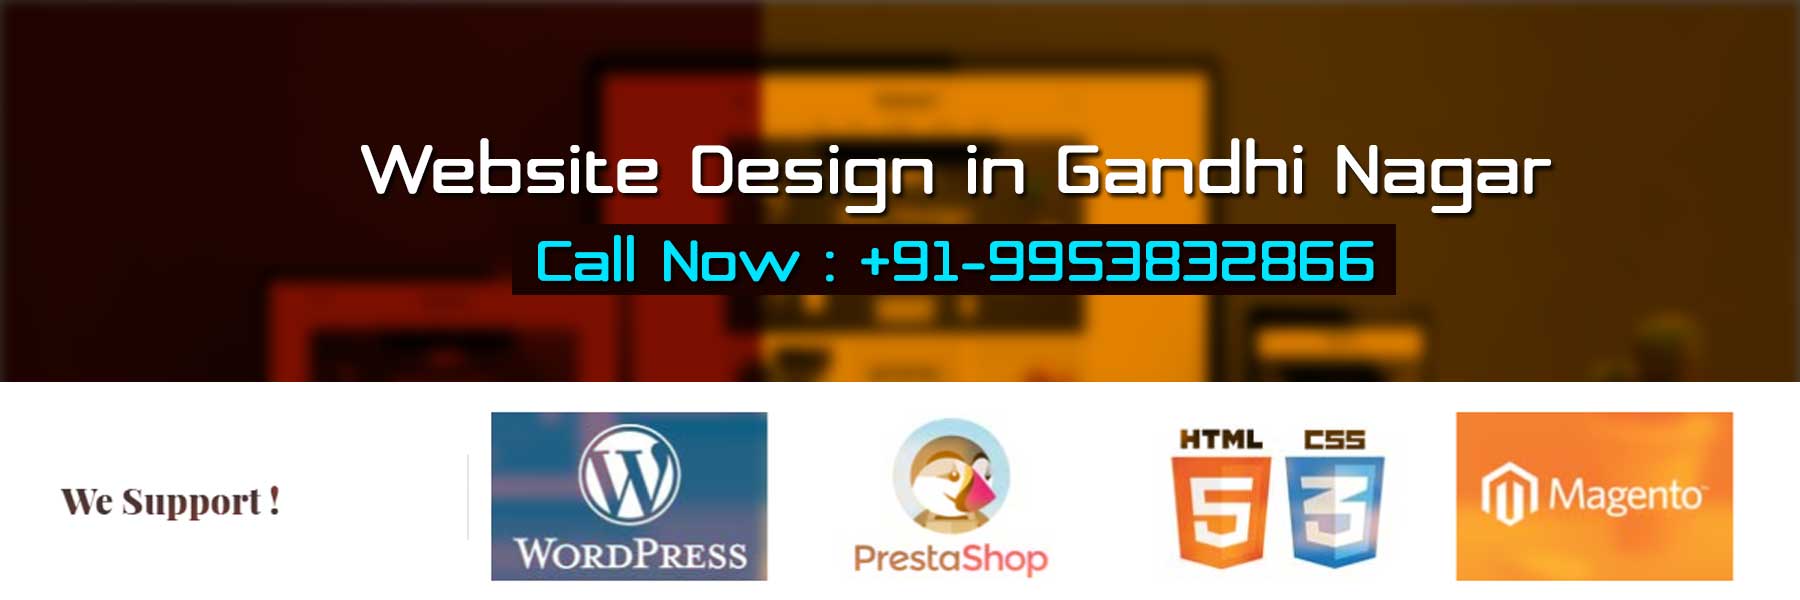 Website Design in Gandhi Nagar